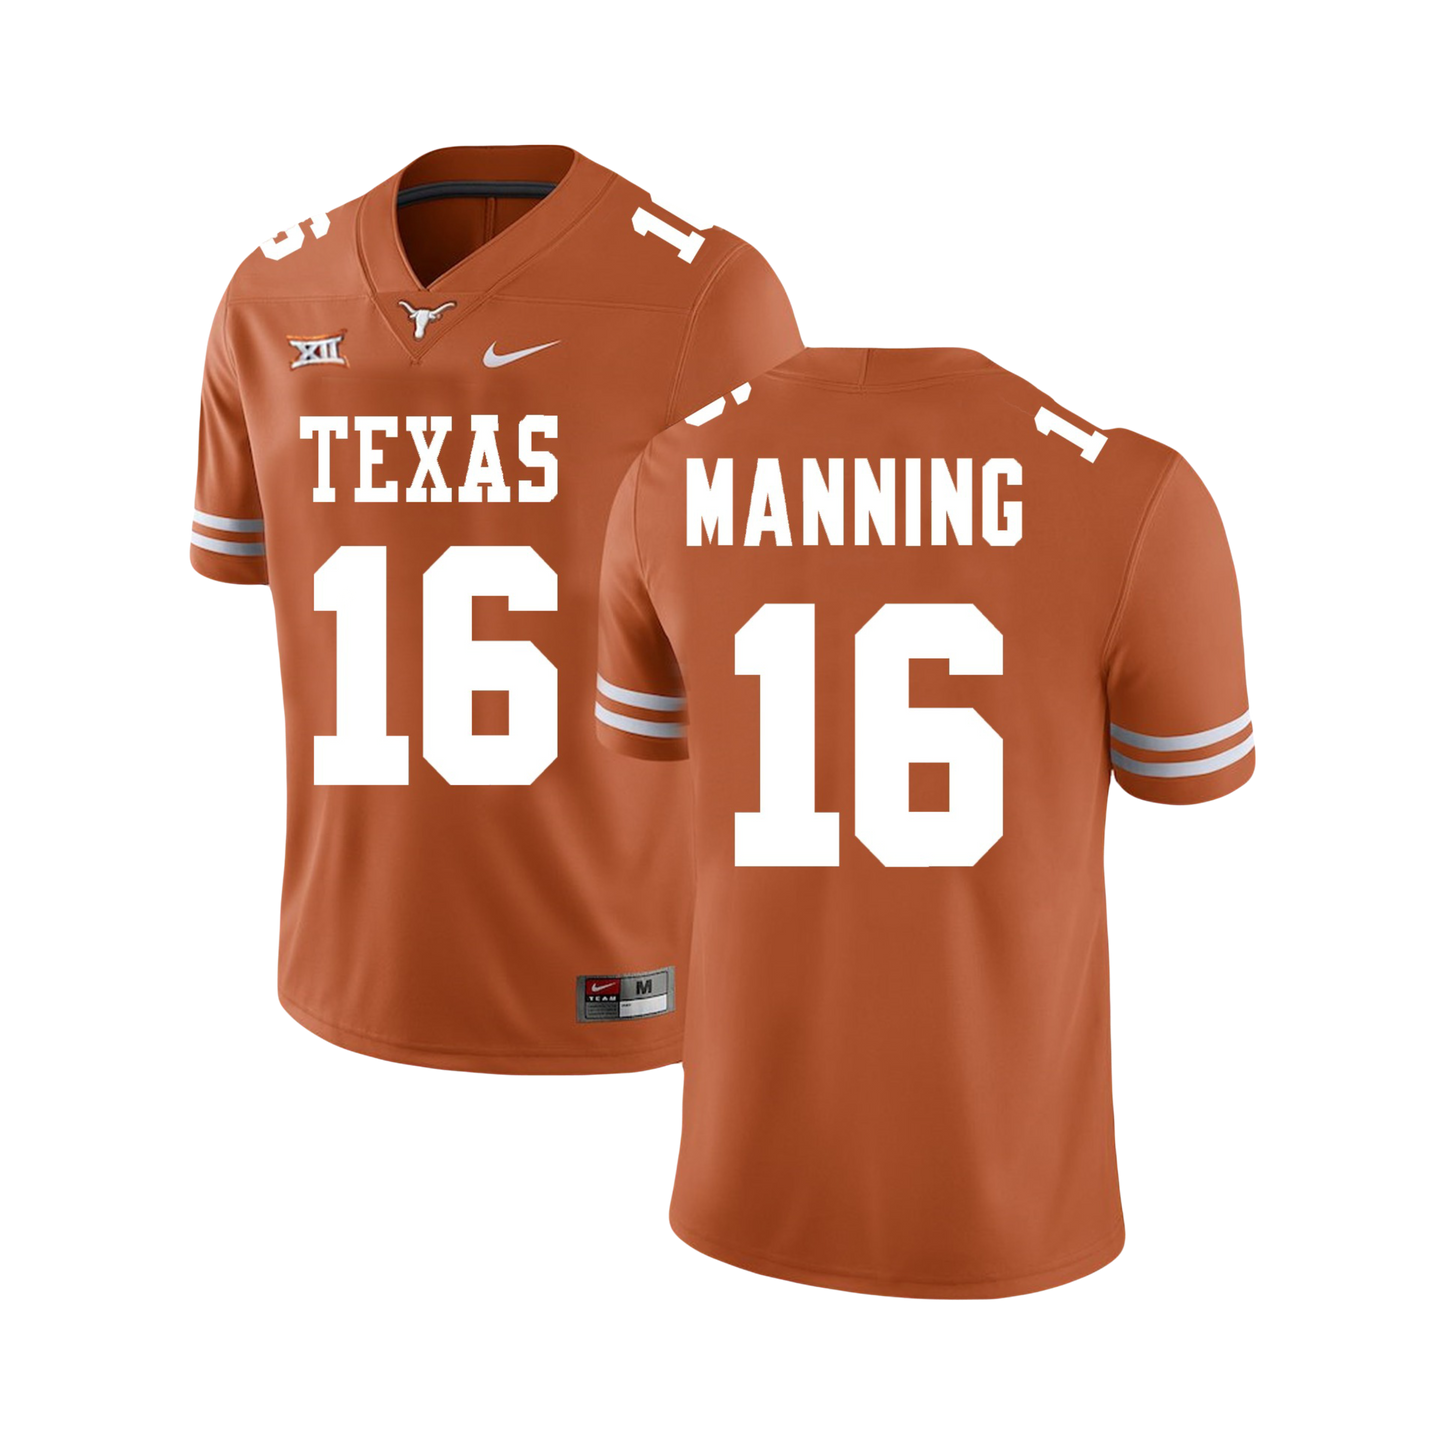 Arch Manning Texas Longhorns NCAA Nike College Football Jersey